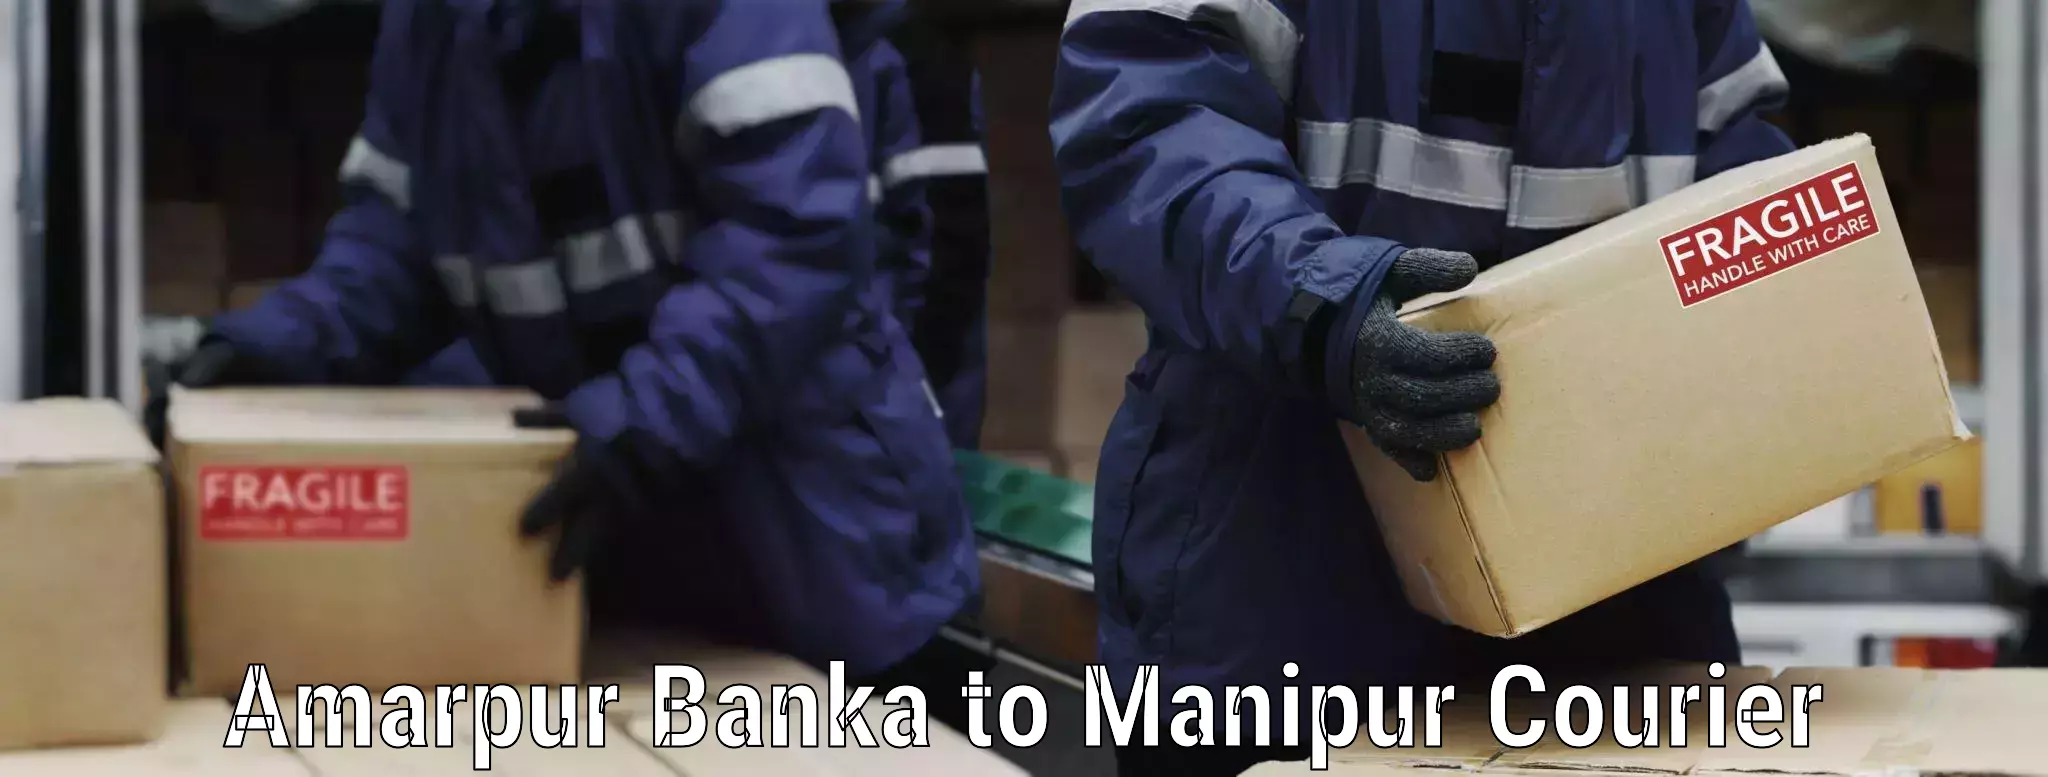 Professional moving company Amarpur Banka to Manipur